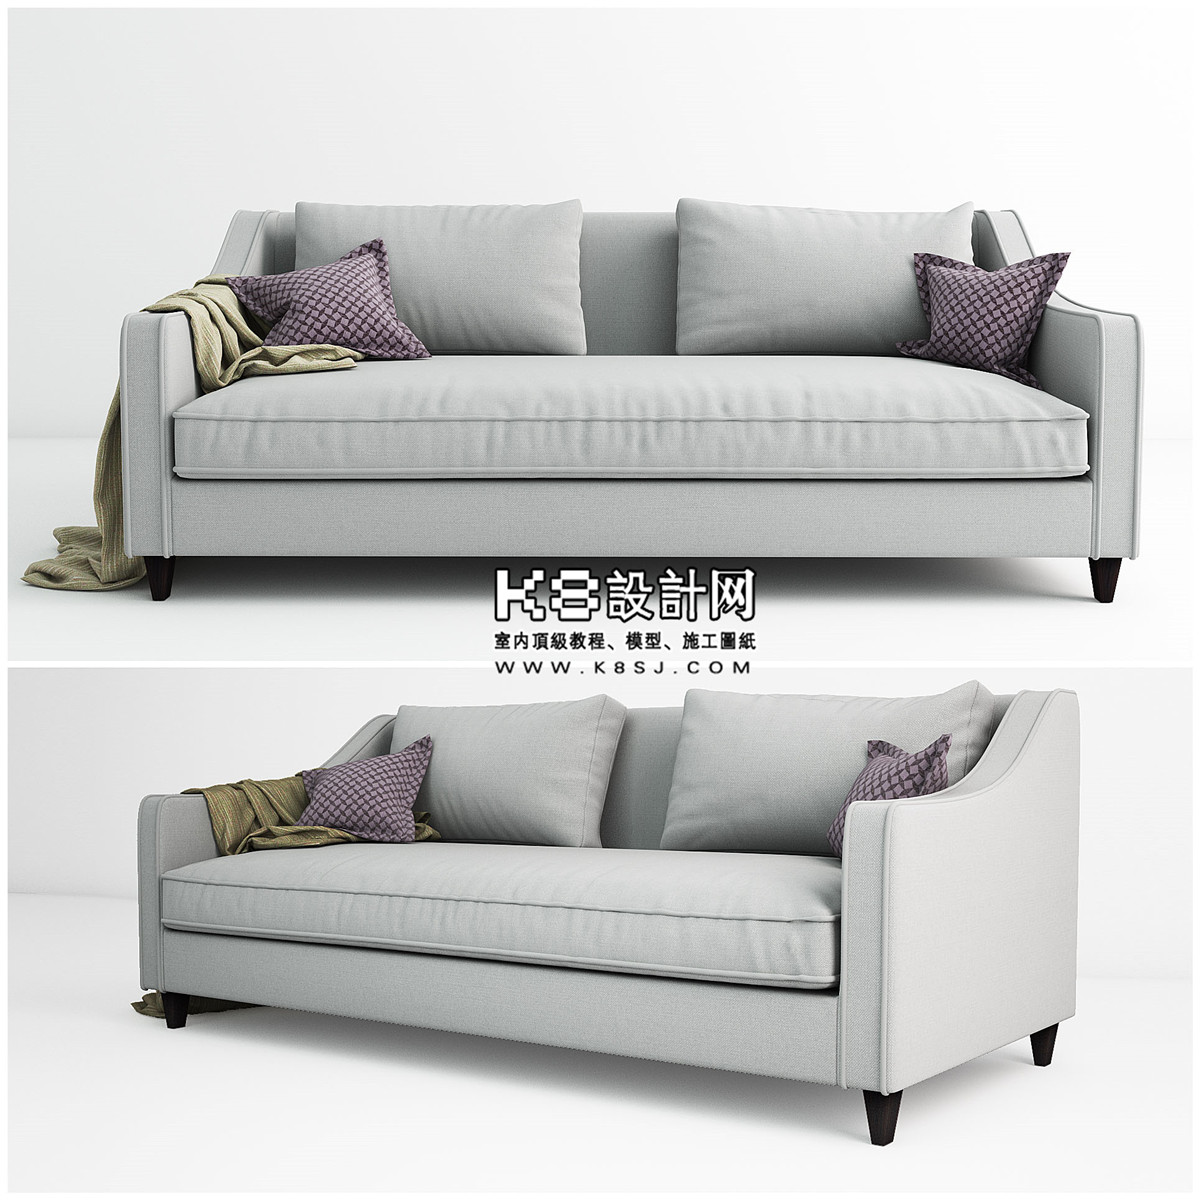 Sofa-collection-2 (1).jpg